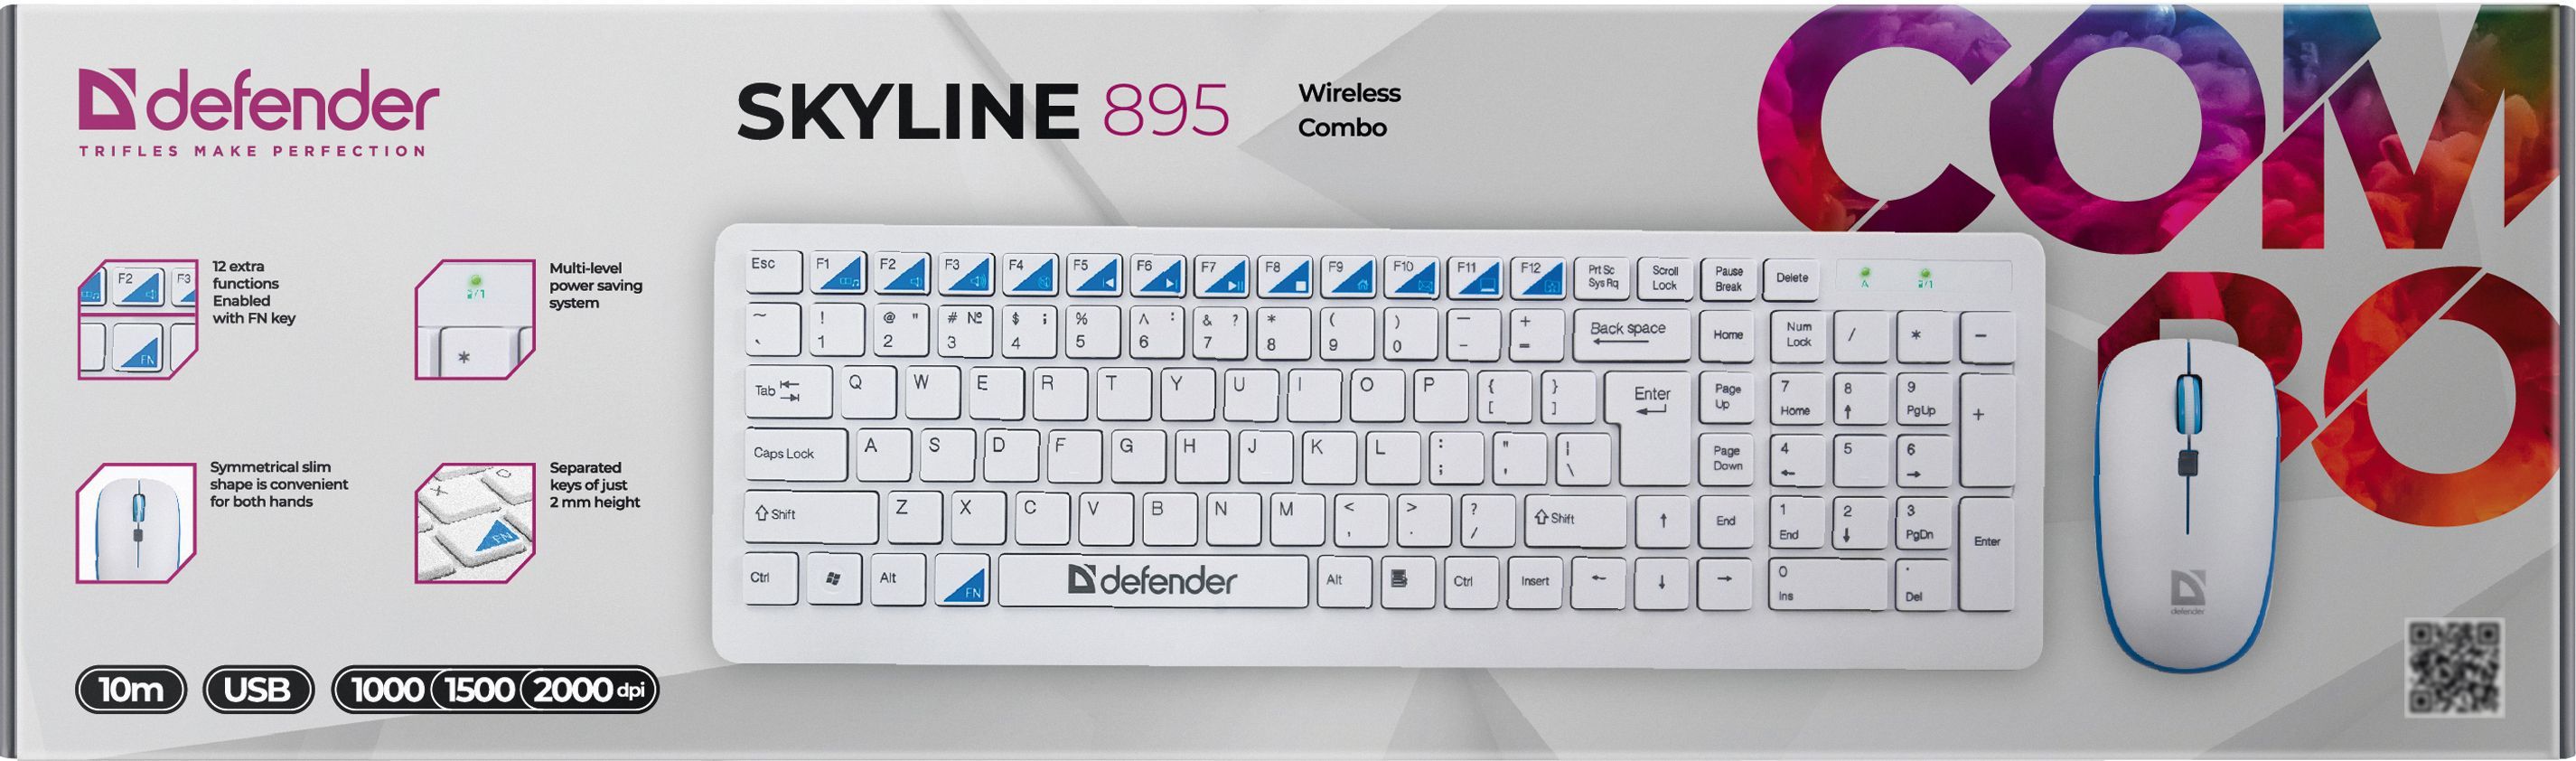 Defender Skyline 895. Defender беспроводной набор Skyline 895 ru,белый, мультимедийный USB. Defender Skyline 895 габарит. Defender skyline